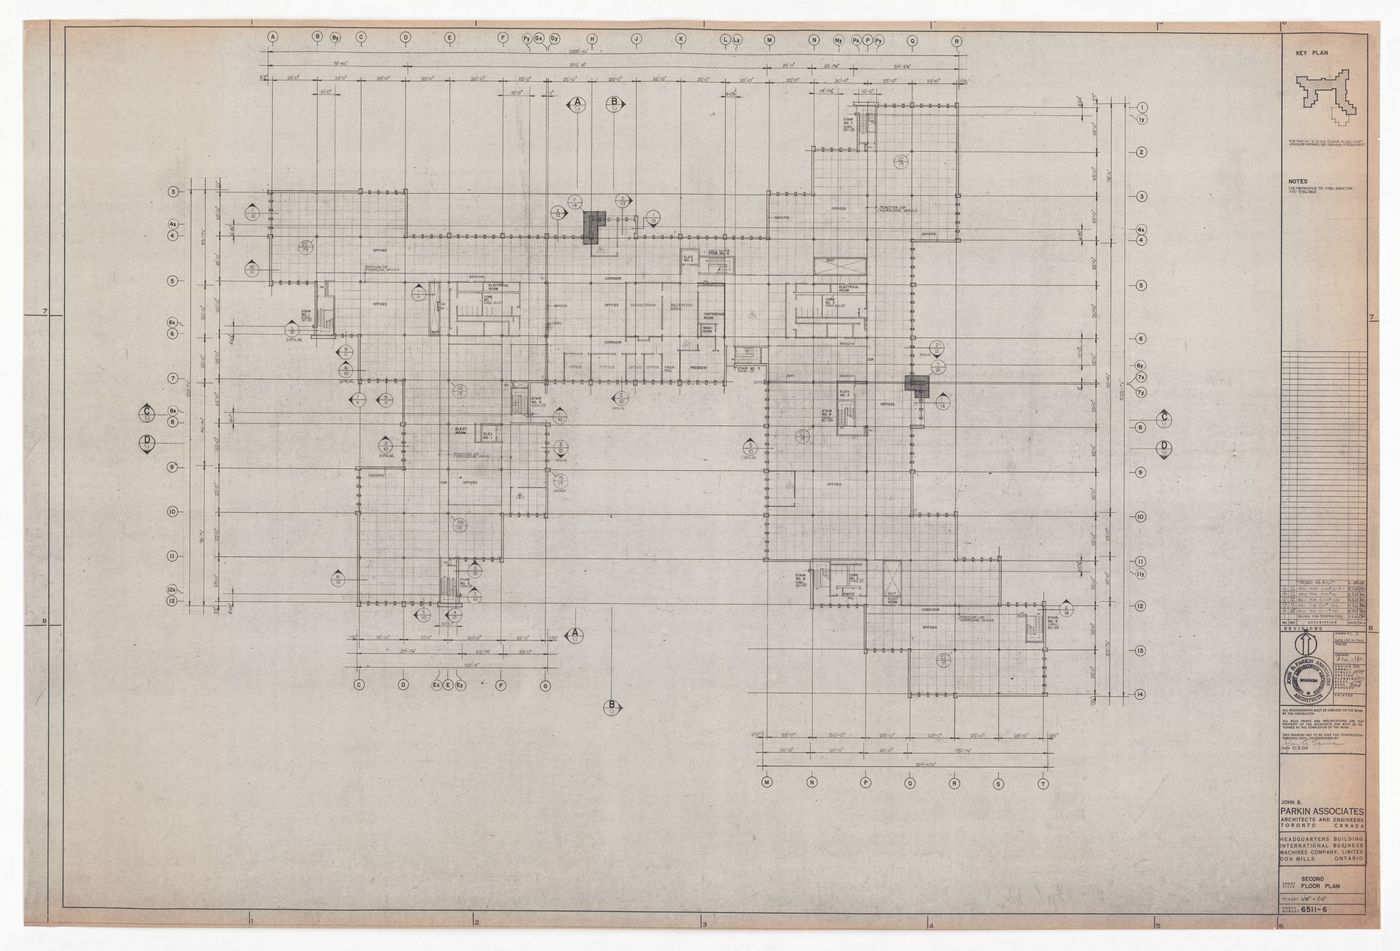 Second floor plan for IBM Headquarters Building, North York, Ontario